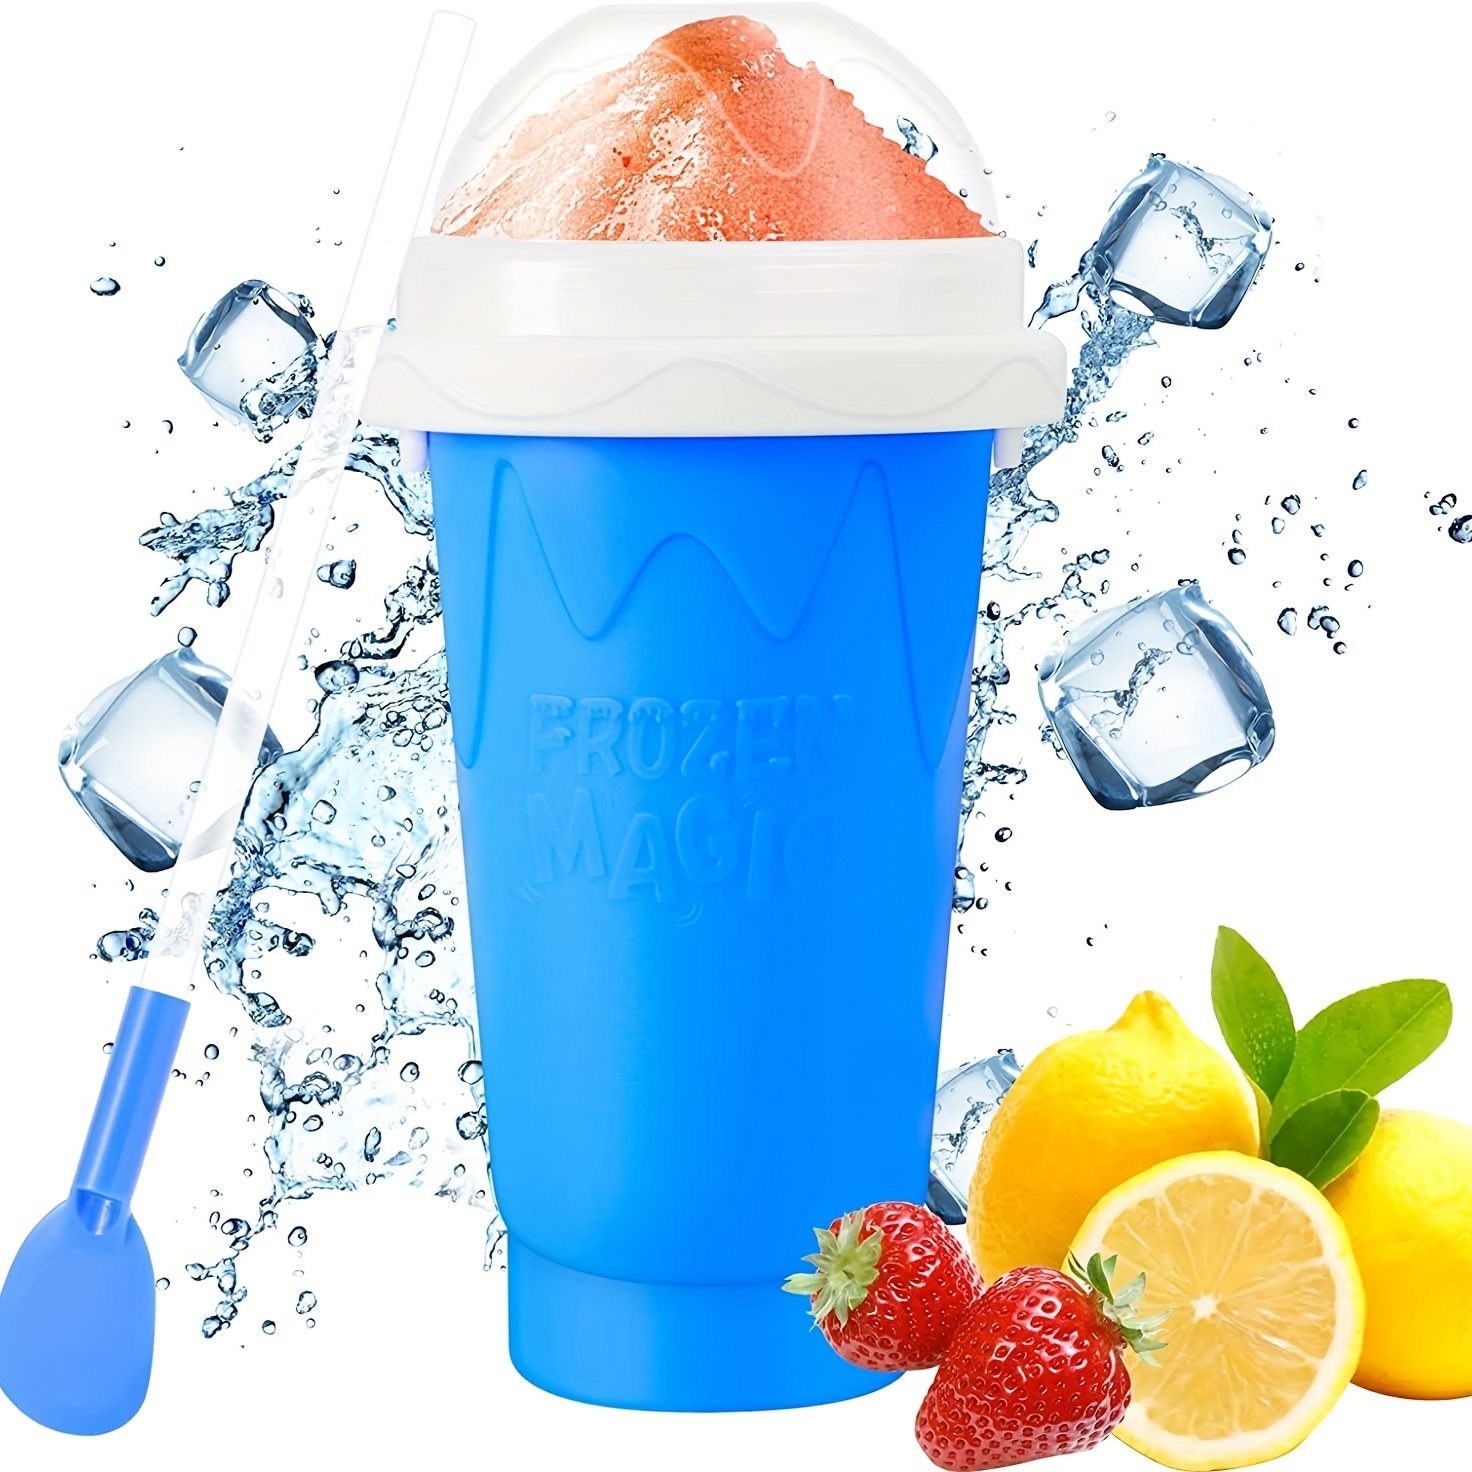 Frozen Magic Slushy Maker Cup Multipurpose Ice Cream Maker Ideal for  Smoothies